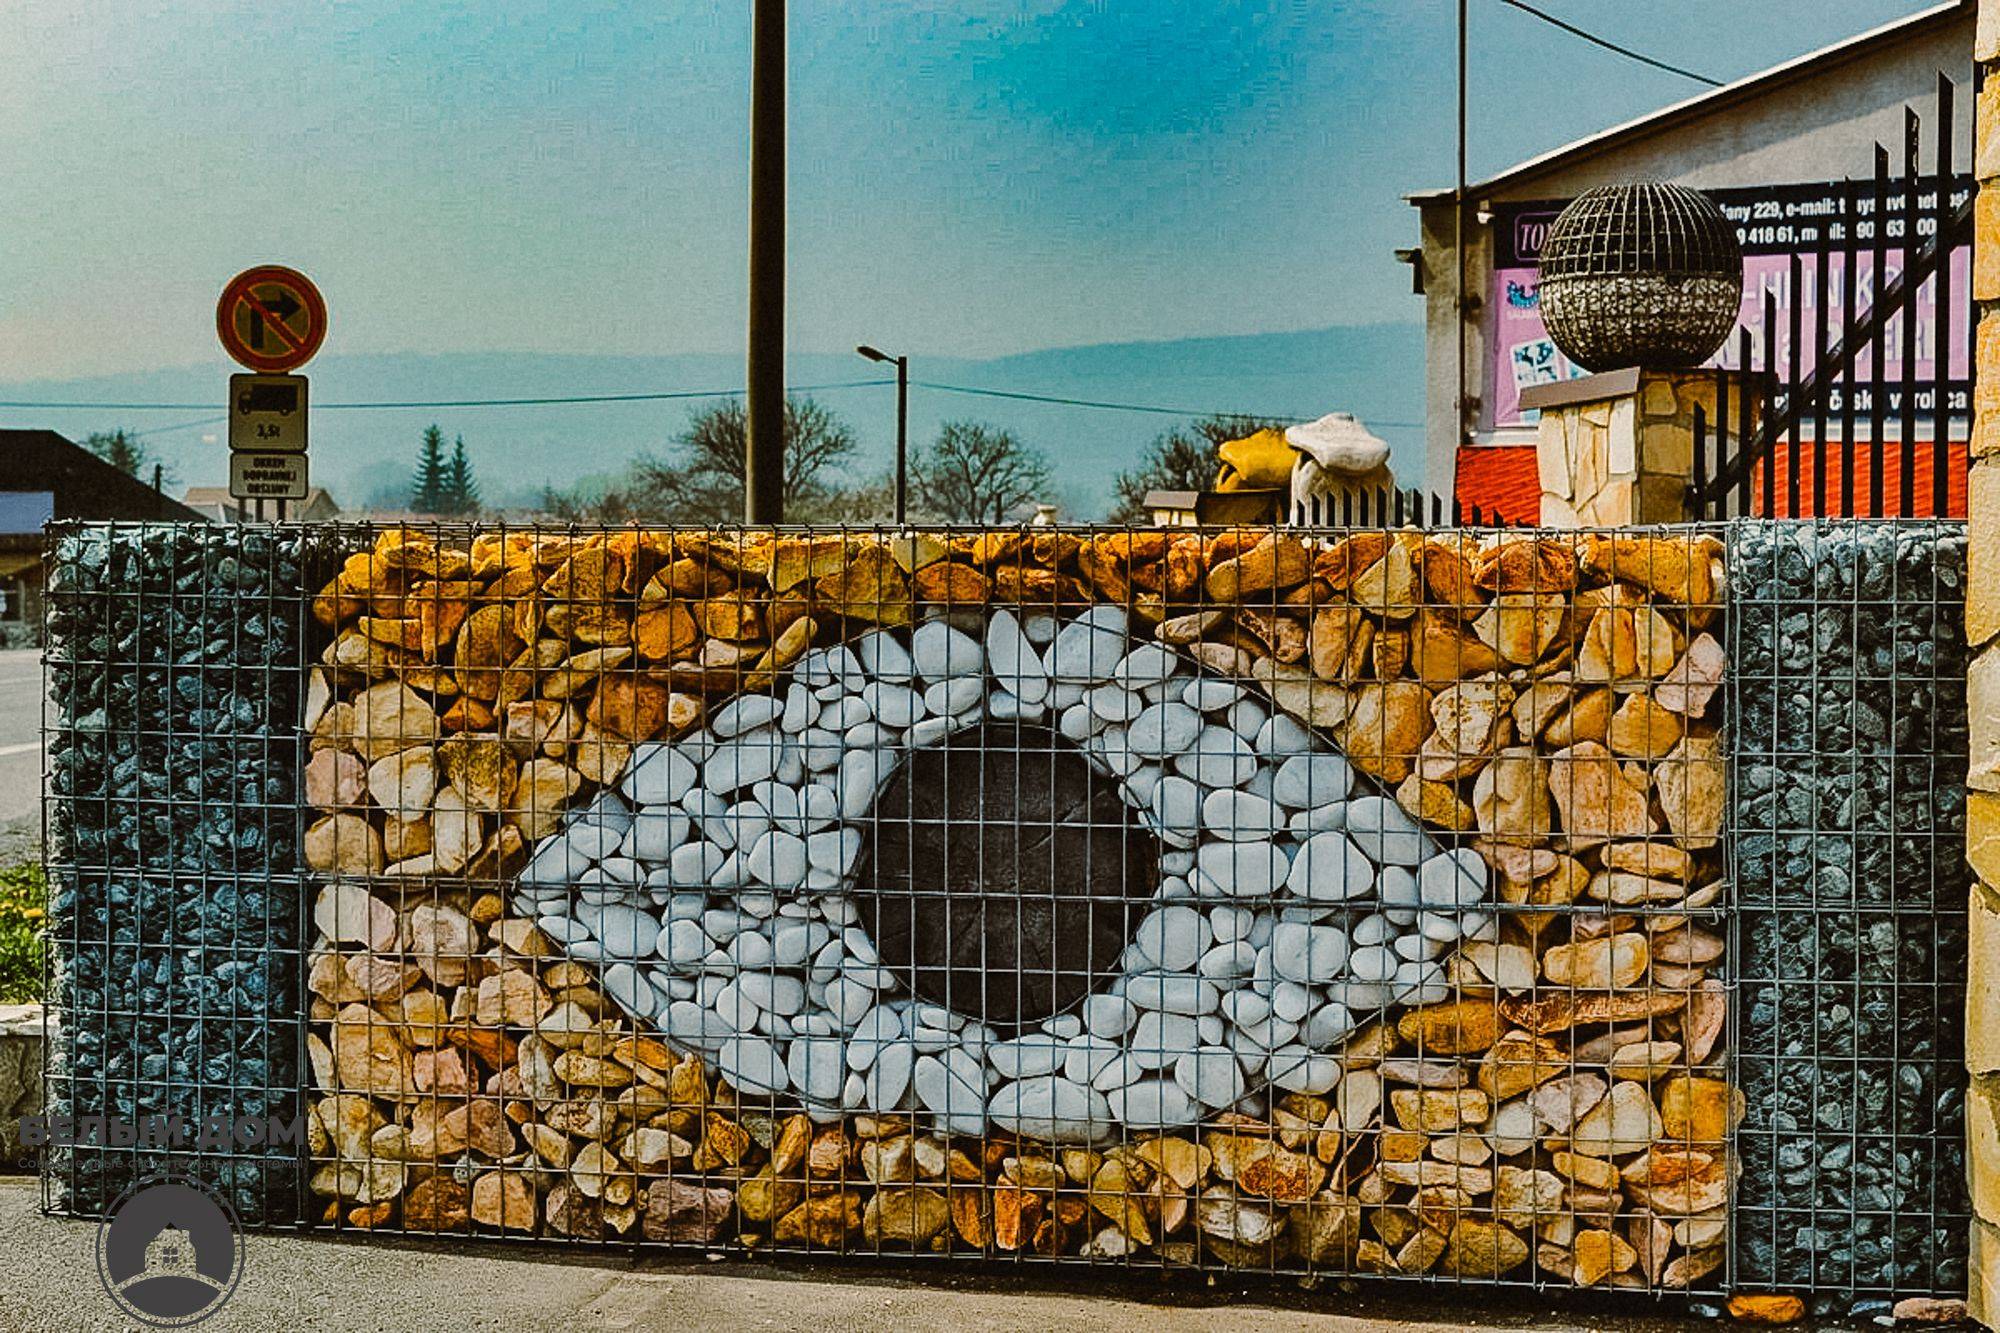 Забор из камня своими руками: фото, видео инструкция